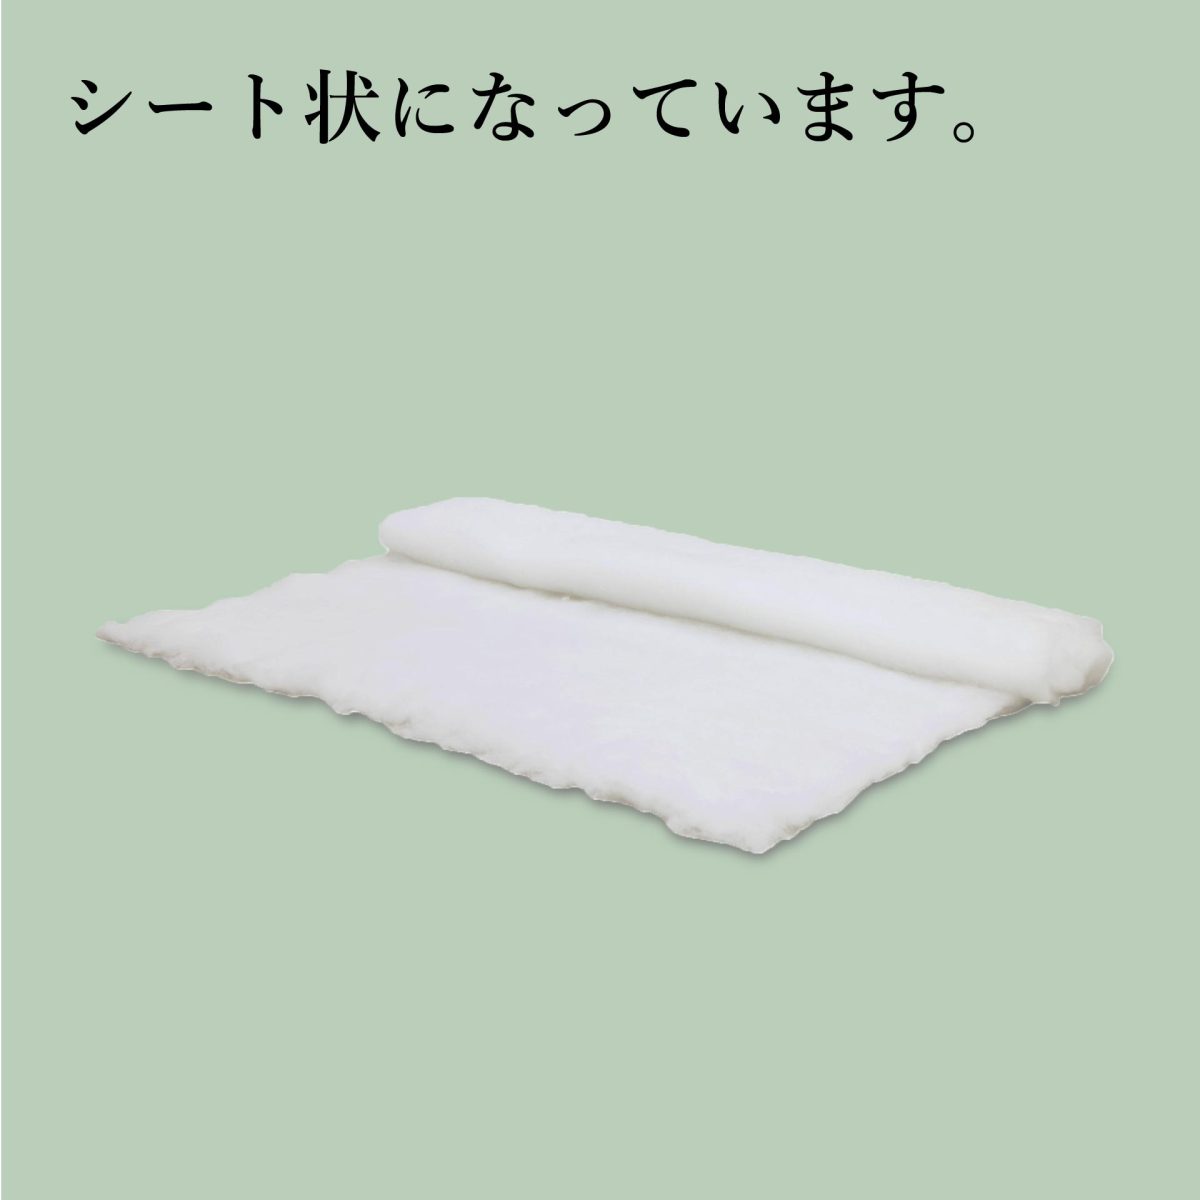  handicrafts cotton 500g made in Japan regular 1 piece supplement for seat type soft toy cushion handicrafts cotton plant 